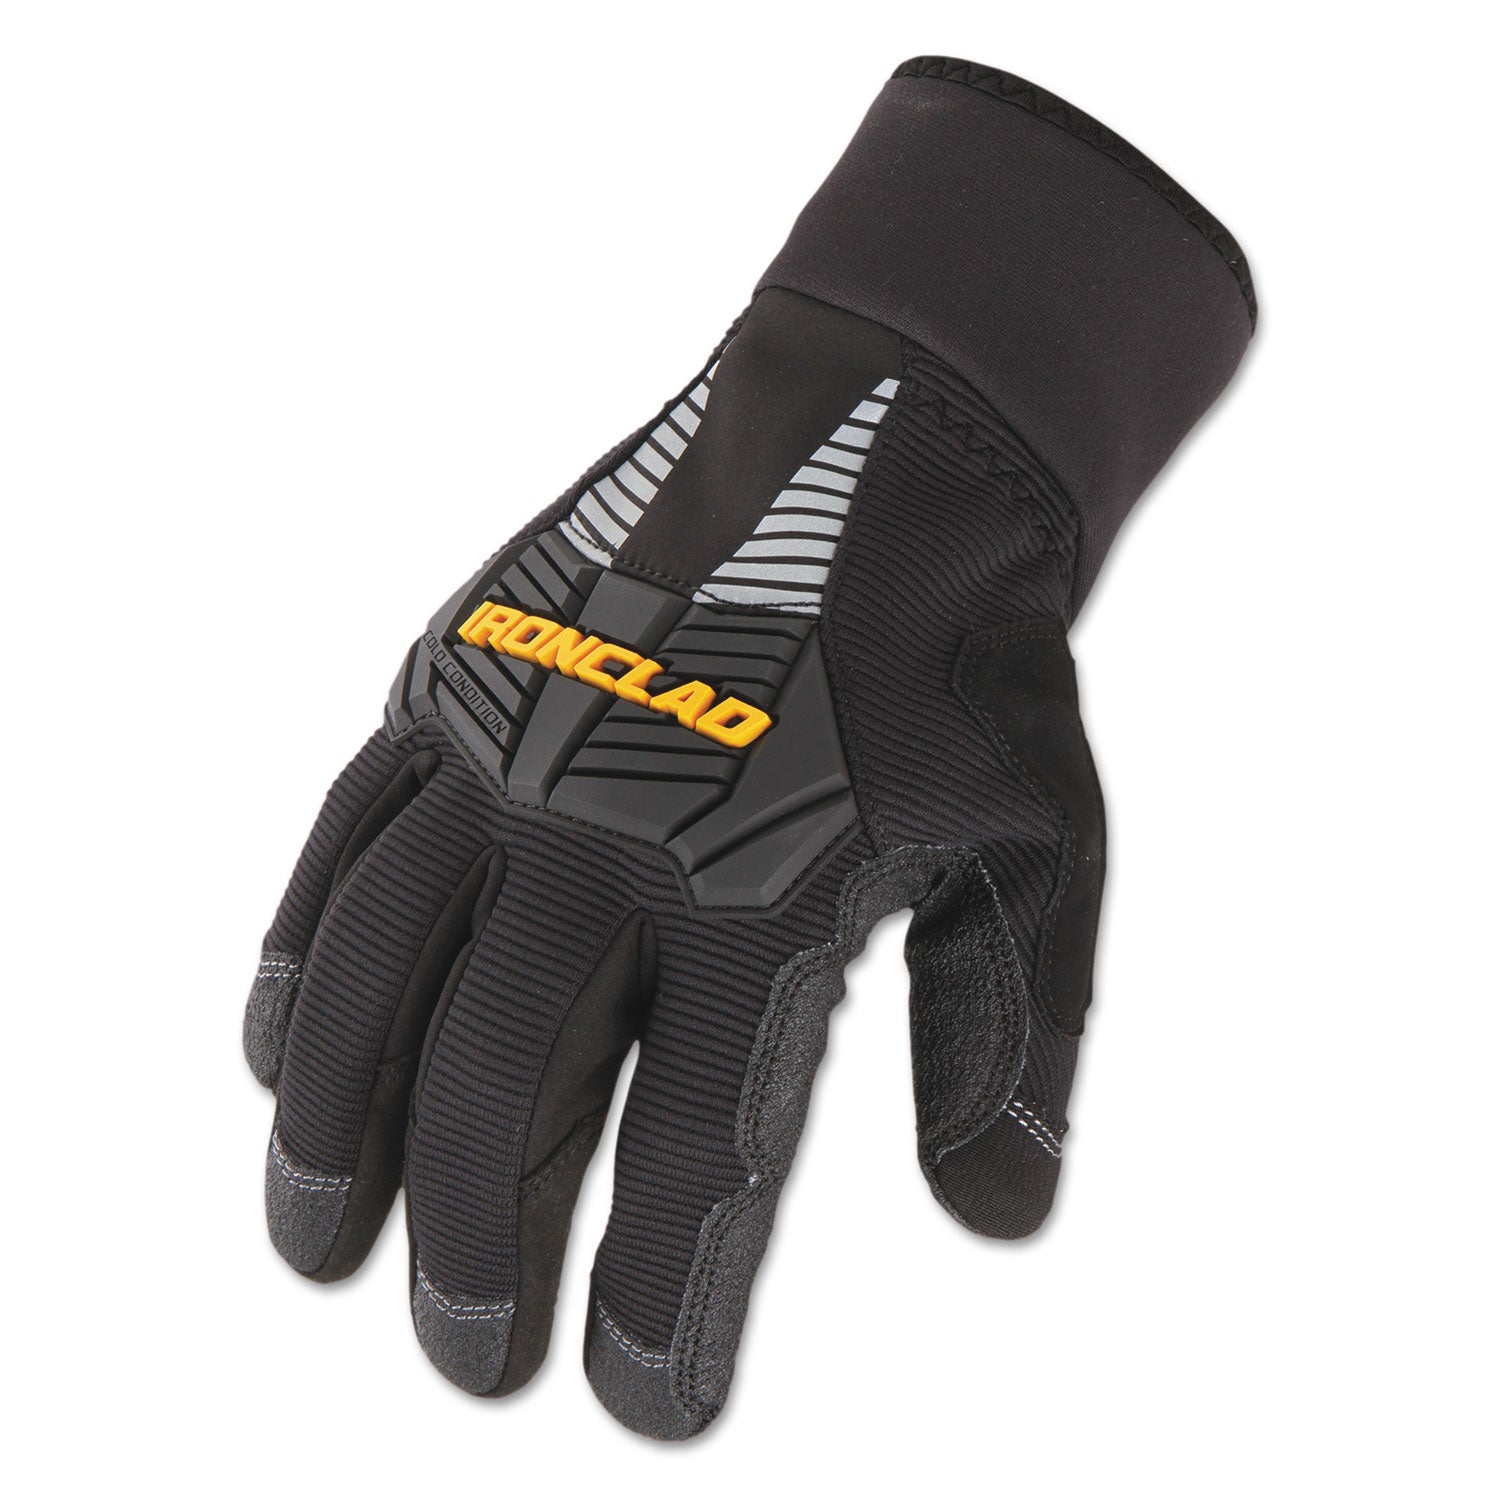 Cold Condition Gloves, Black, Medium - 